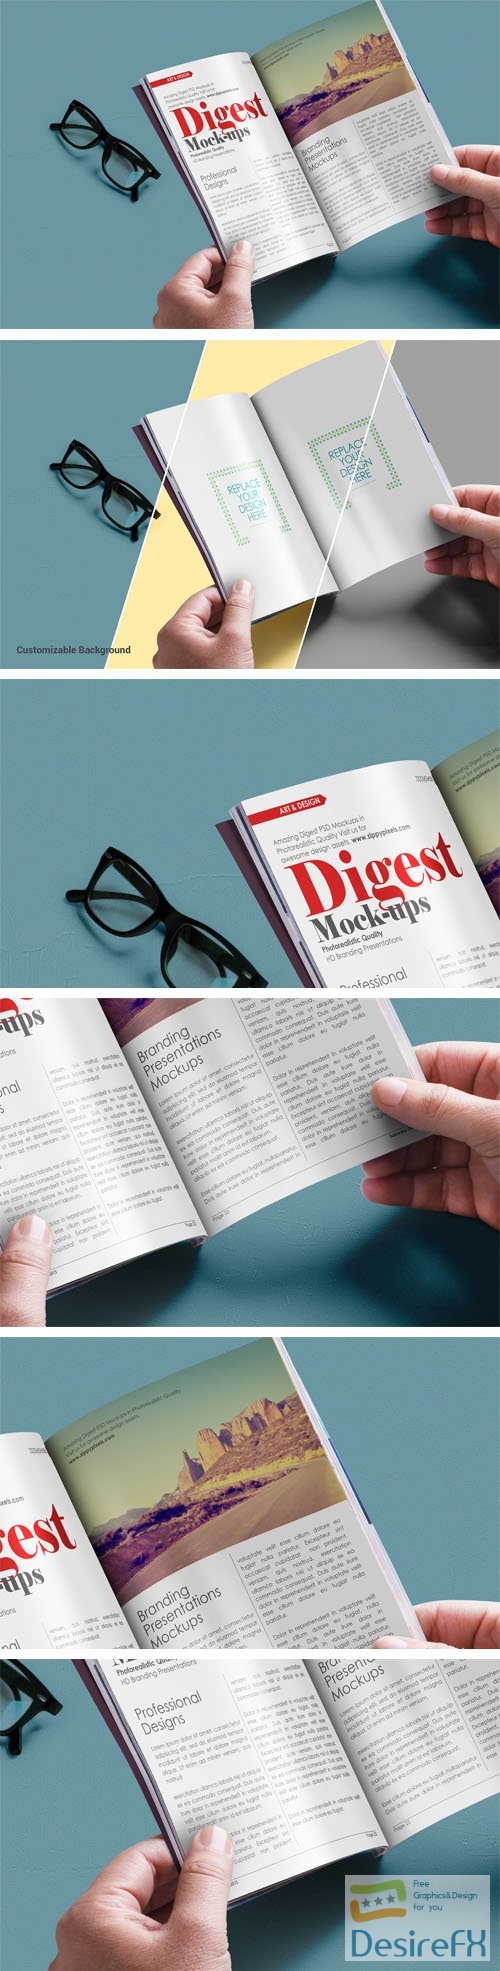 Amazing Digest Size Magazine PSD Mockup Template